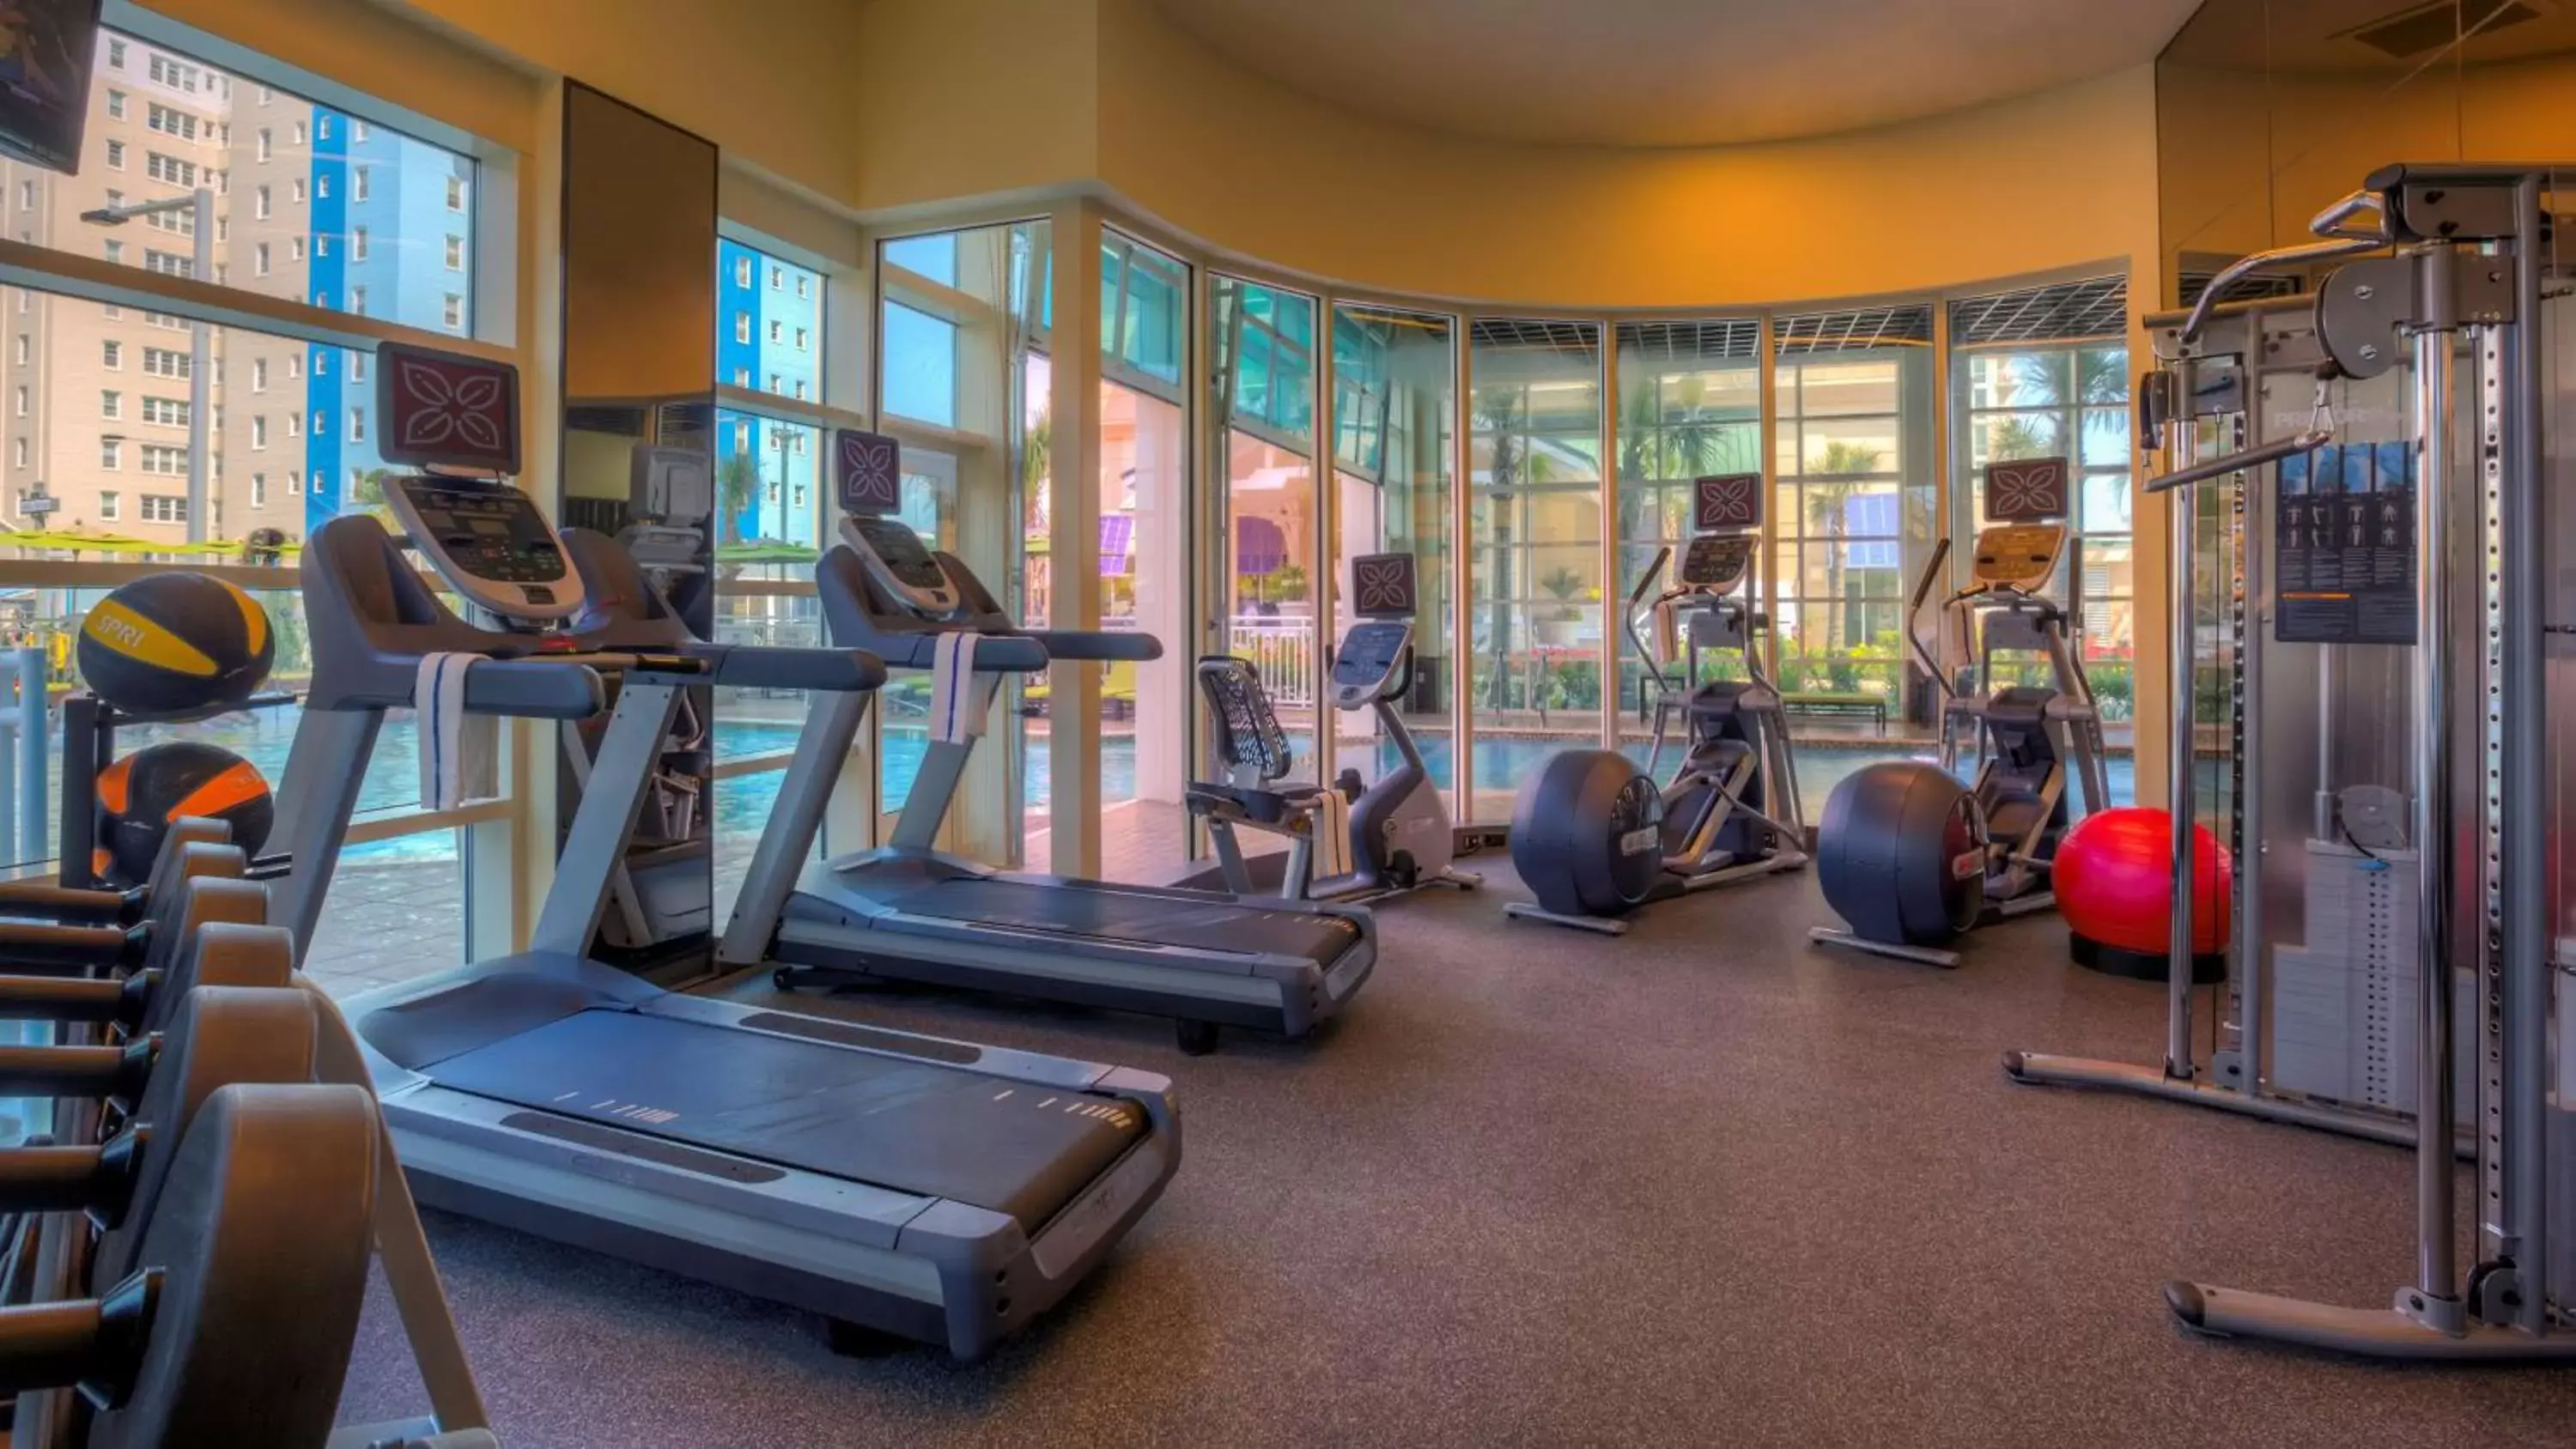 Fitness centre/facilities, Fitness Center/Facilities in Hilton Garden Inn Virginia Beach Oceanfront